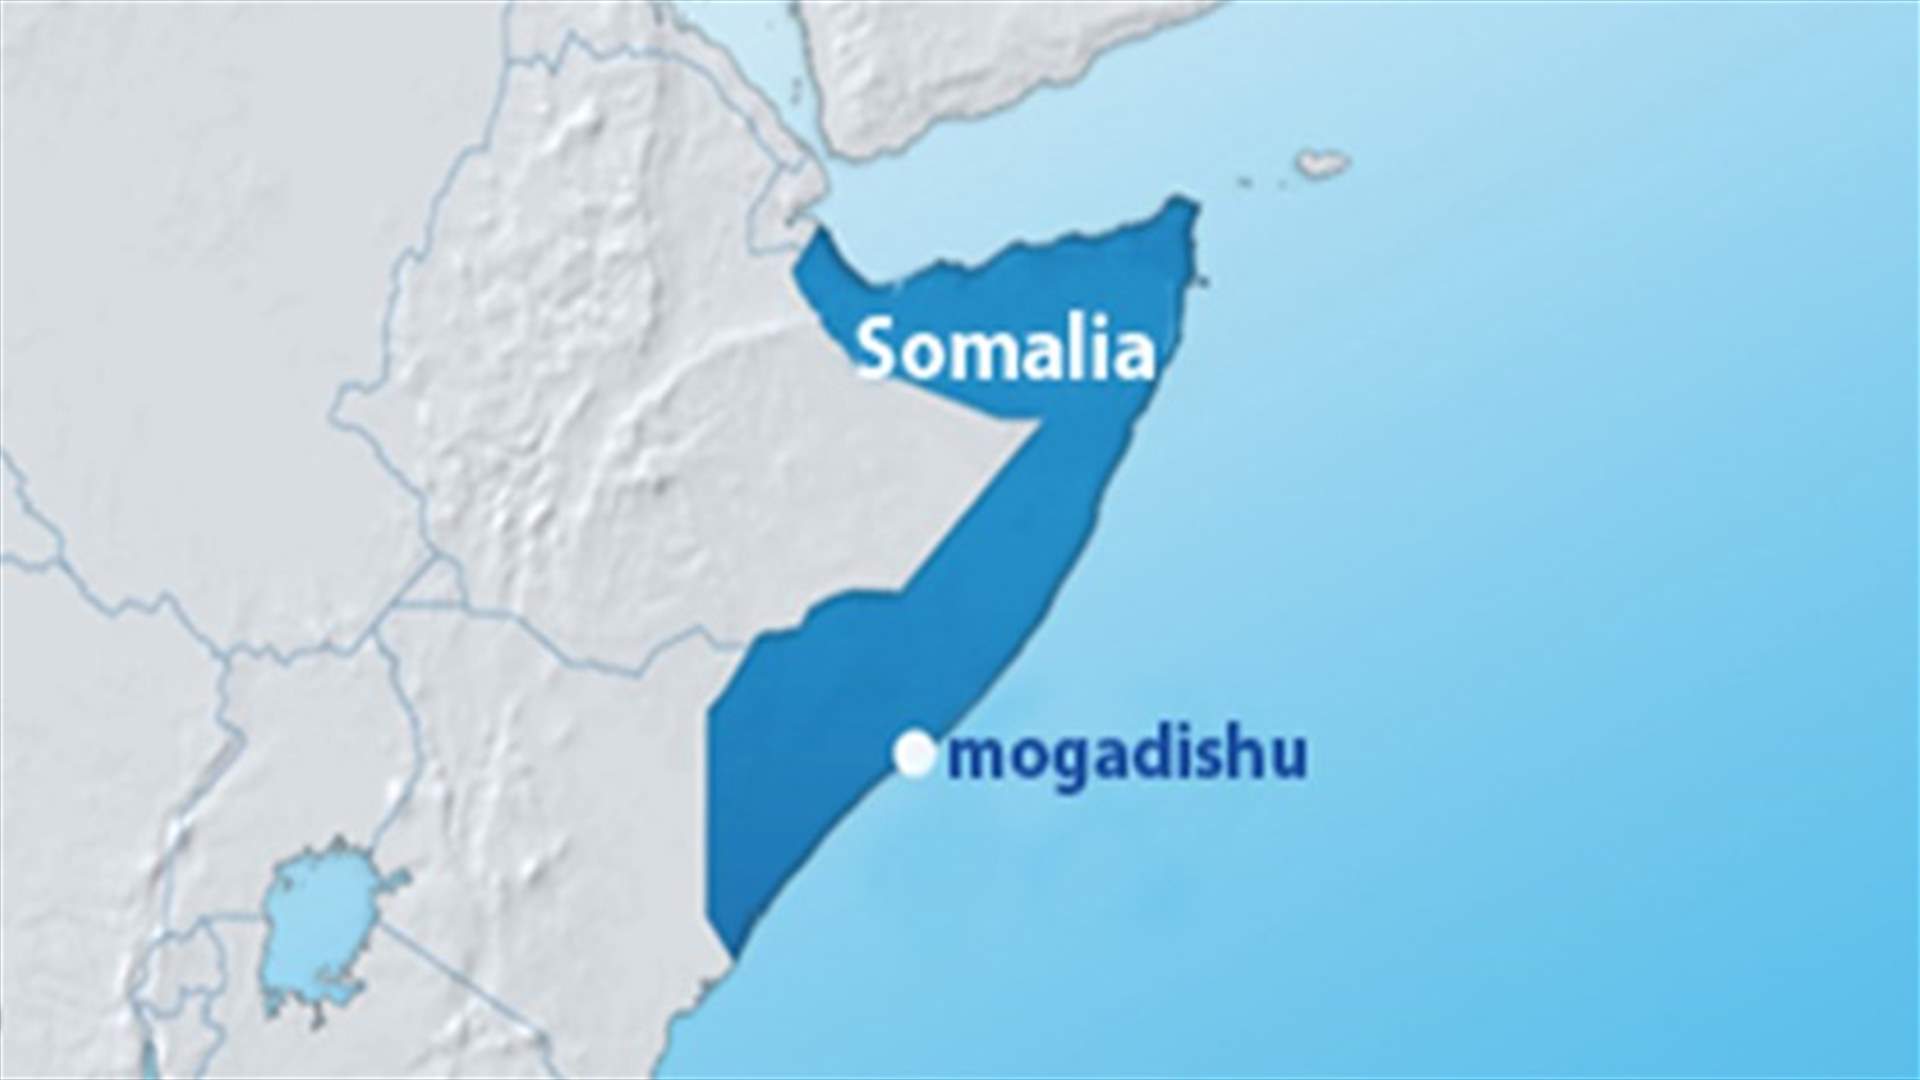 At least 18 killed by a roadside bomb in Somalia